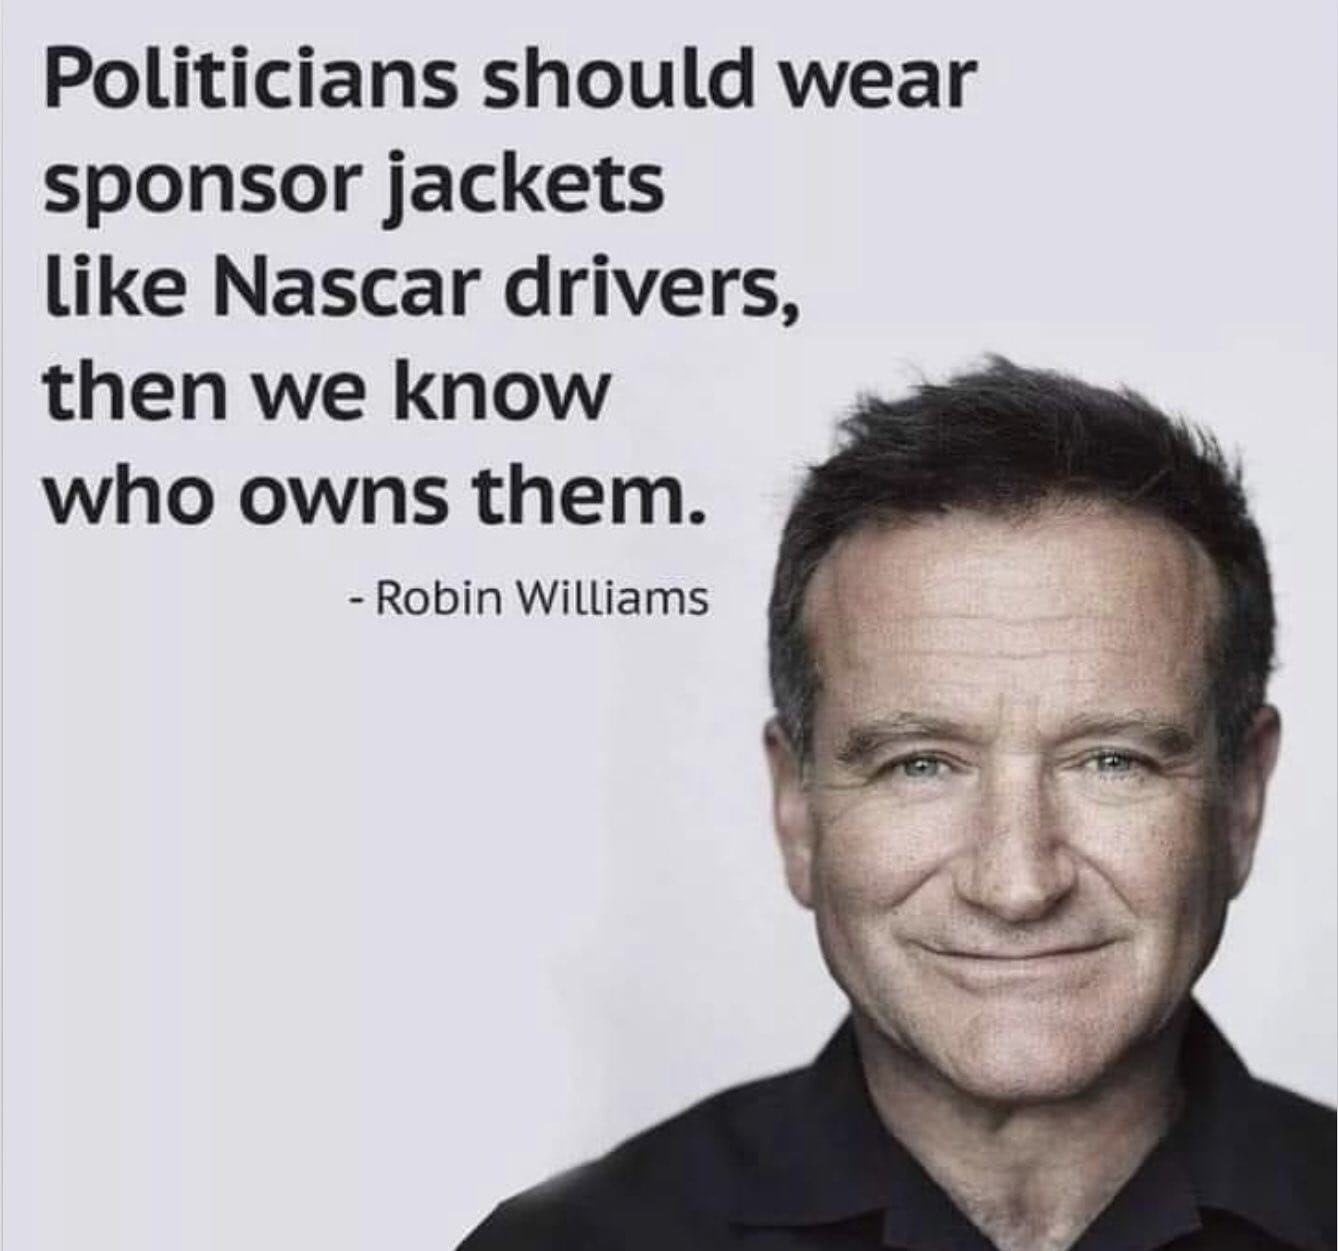 Did Robin Williams Say 'Politicians Should Wear Sponsor Jackets Like NASCAR  Drivers'? | Snopes.com